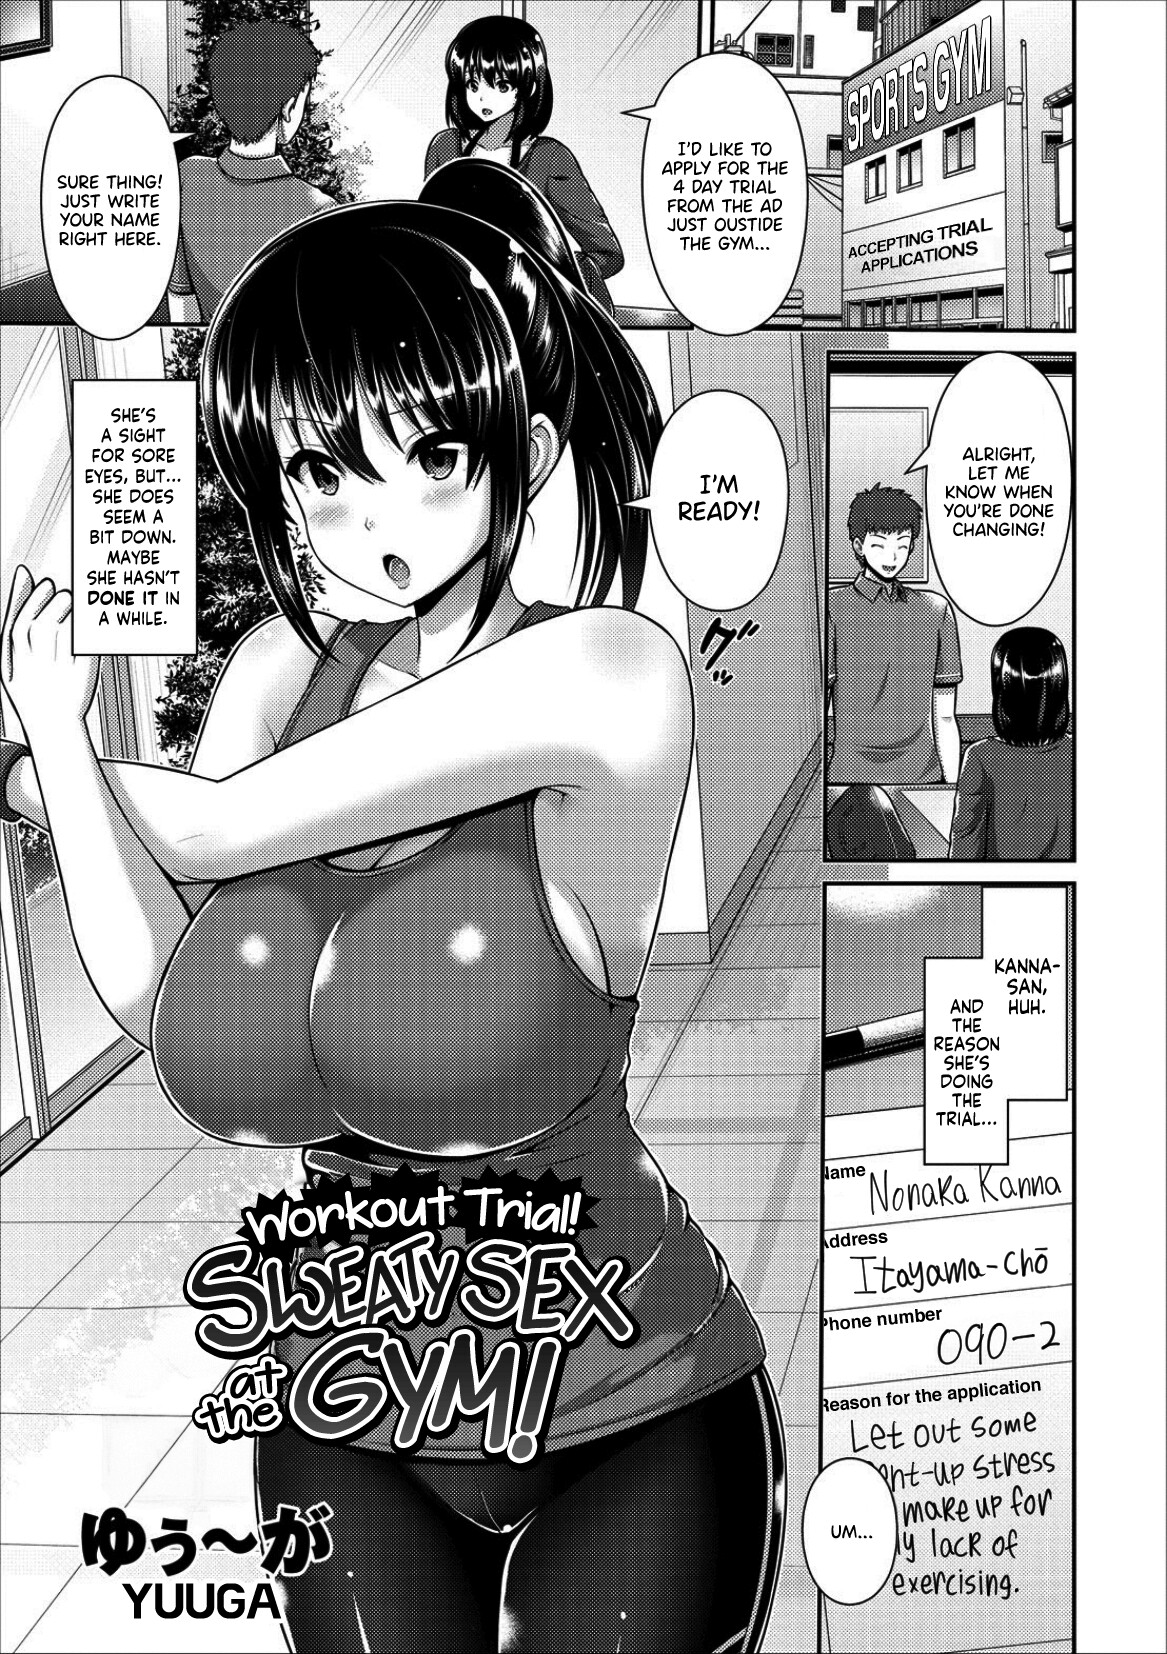 Hentai Manga Comic-Workout Trial! Sweaty Sex at the Gym!-Read-1